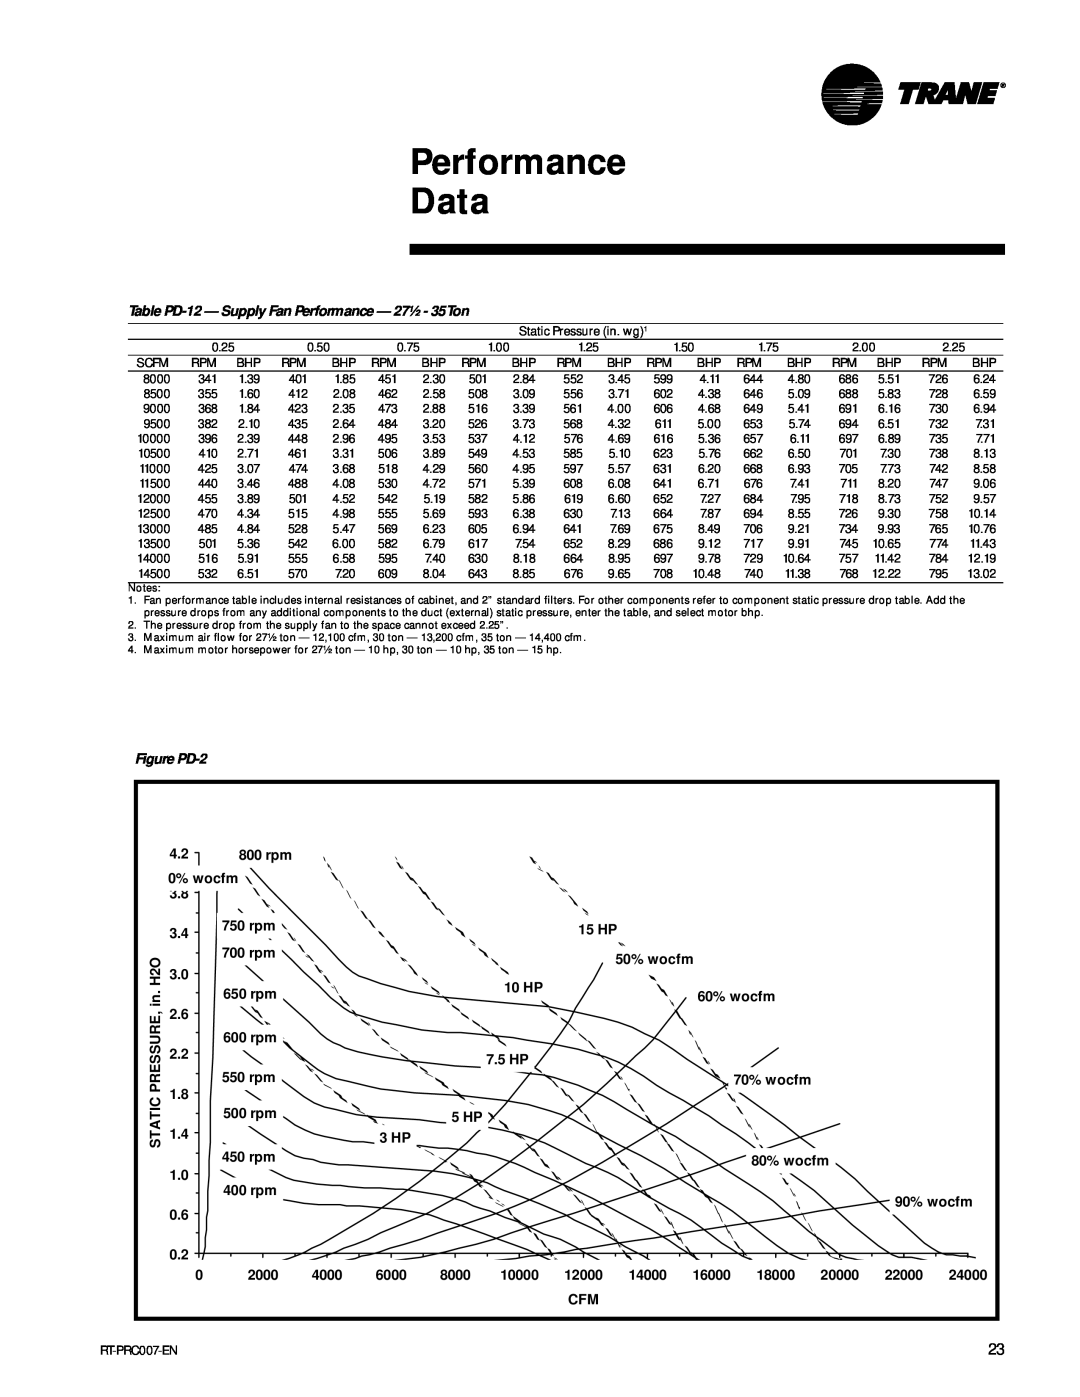 Trane RT-PRC007-EN manual Performance Data, Table PD-12- Supply Fan Performance - 27½ - 35Ton, Figure PD-2 